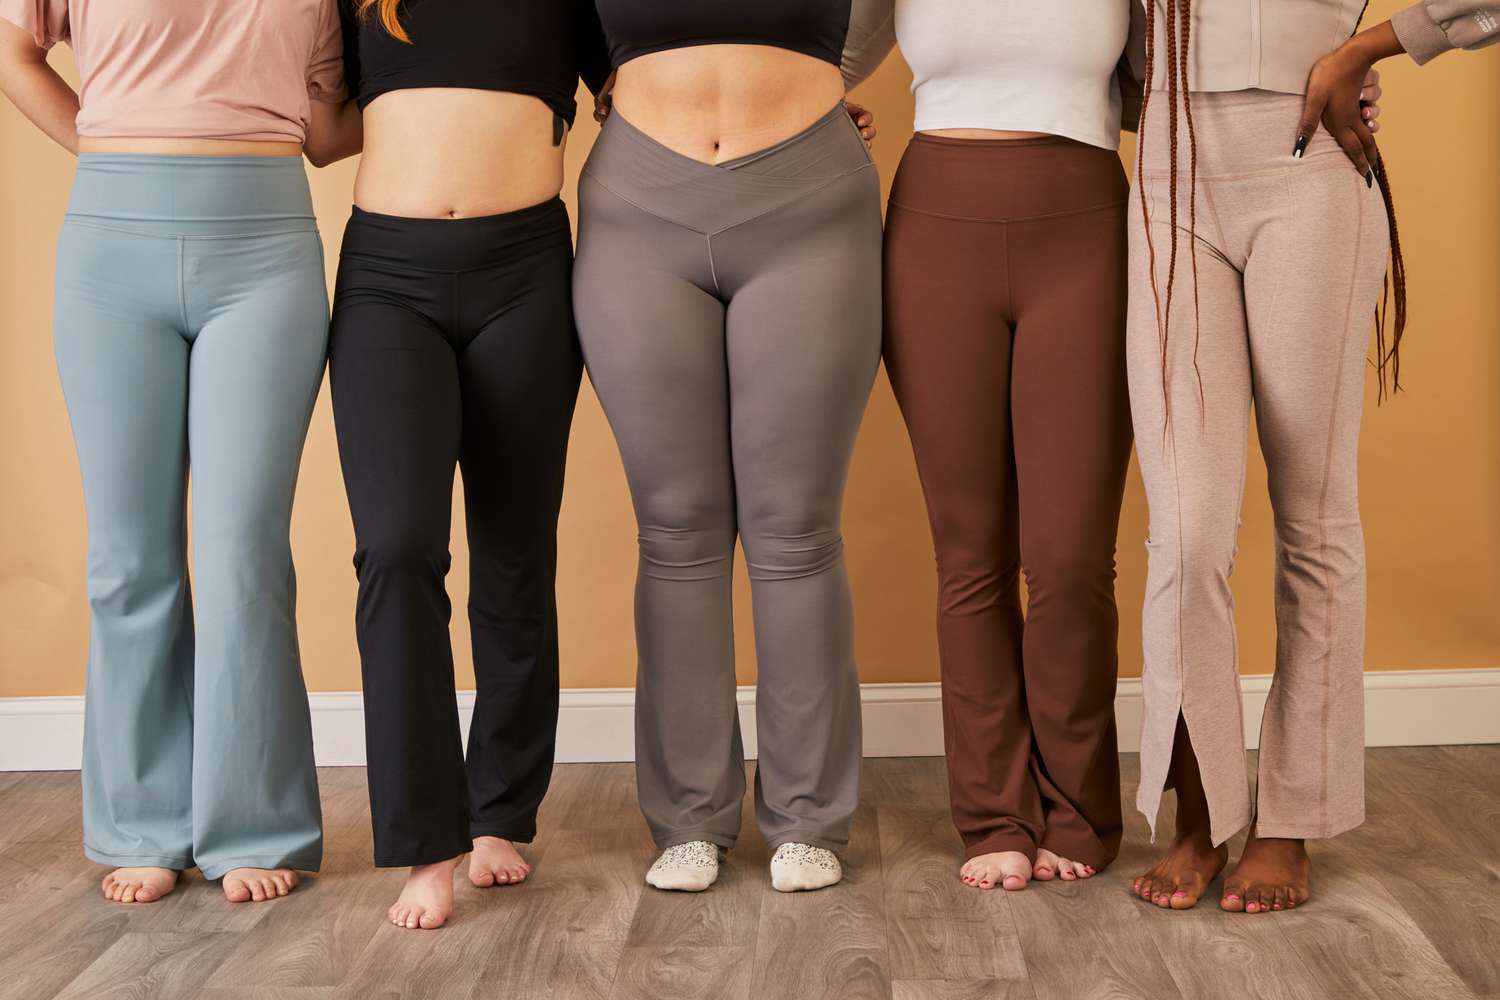 cindy ewalt recommends teen yoga pants cameltoe pic